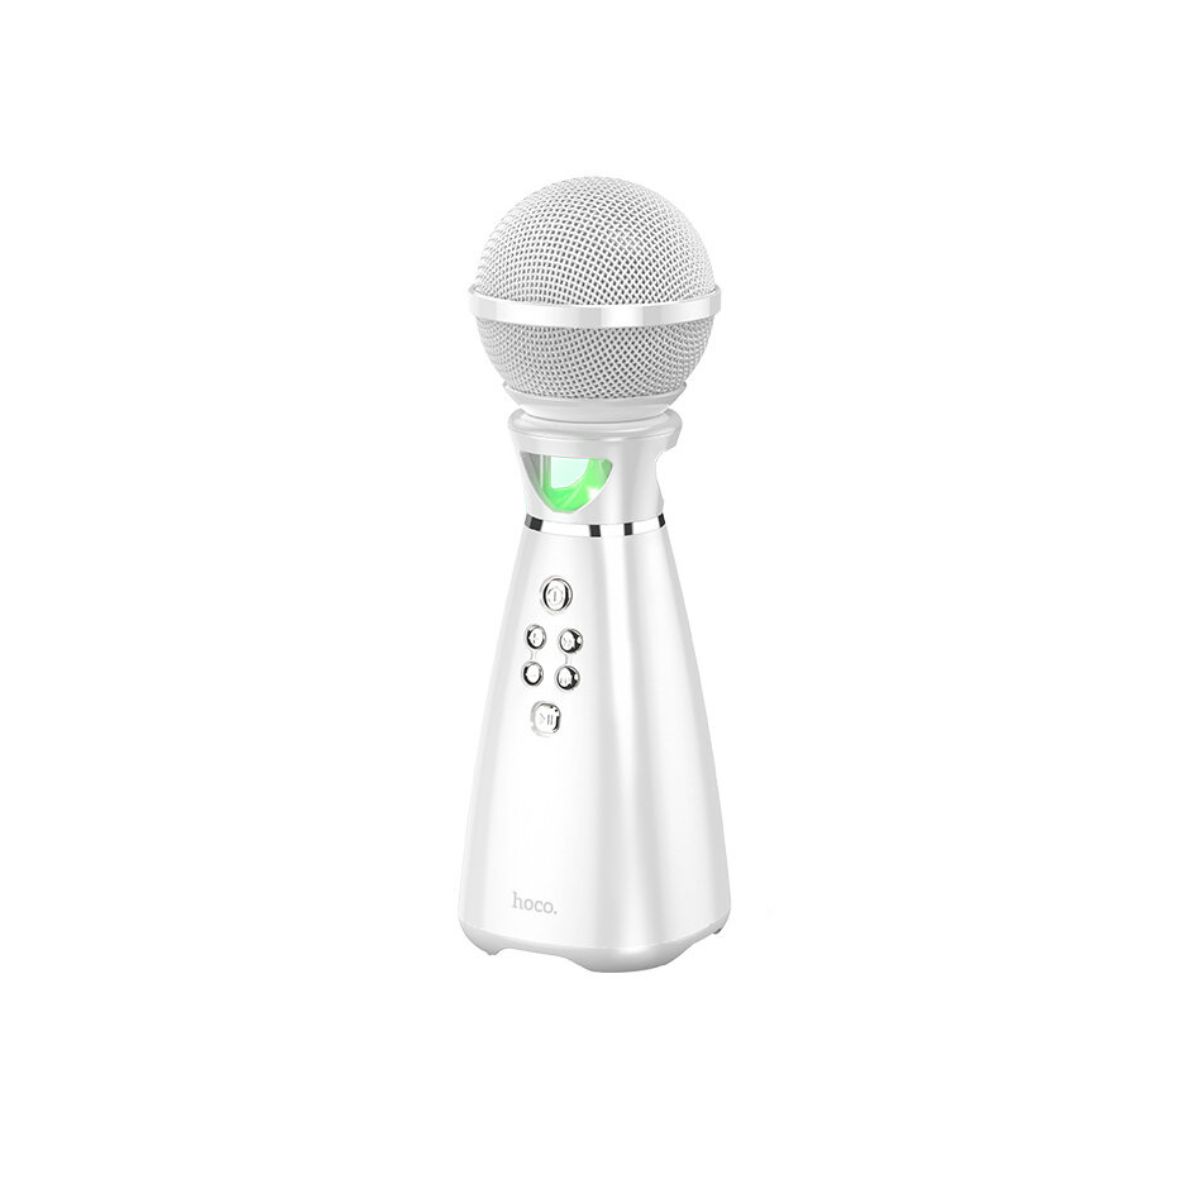 Hoco BK6 Hi-Song K Song Microphone - White